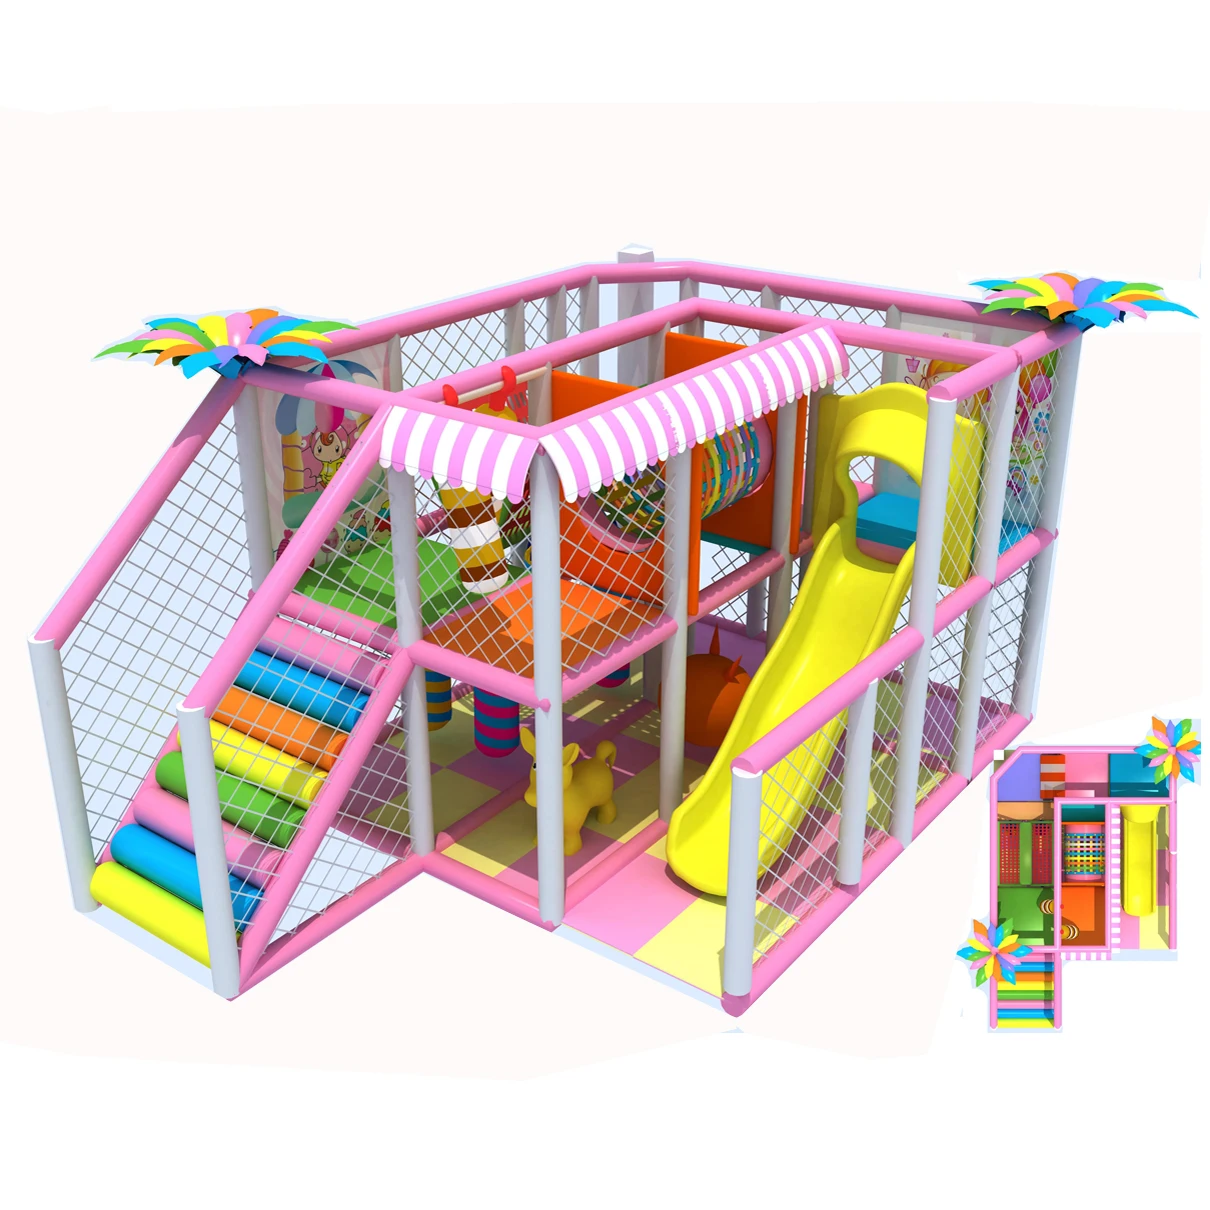 

YLWCNN Amusement Indoor Play Park Candy Maze Structure Soft playground Park Kids Toy Game Equipment Small Pink Playground